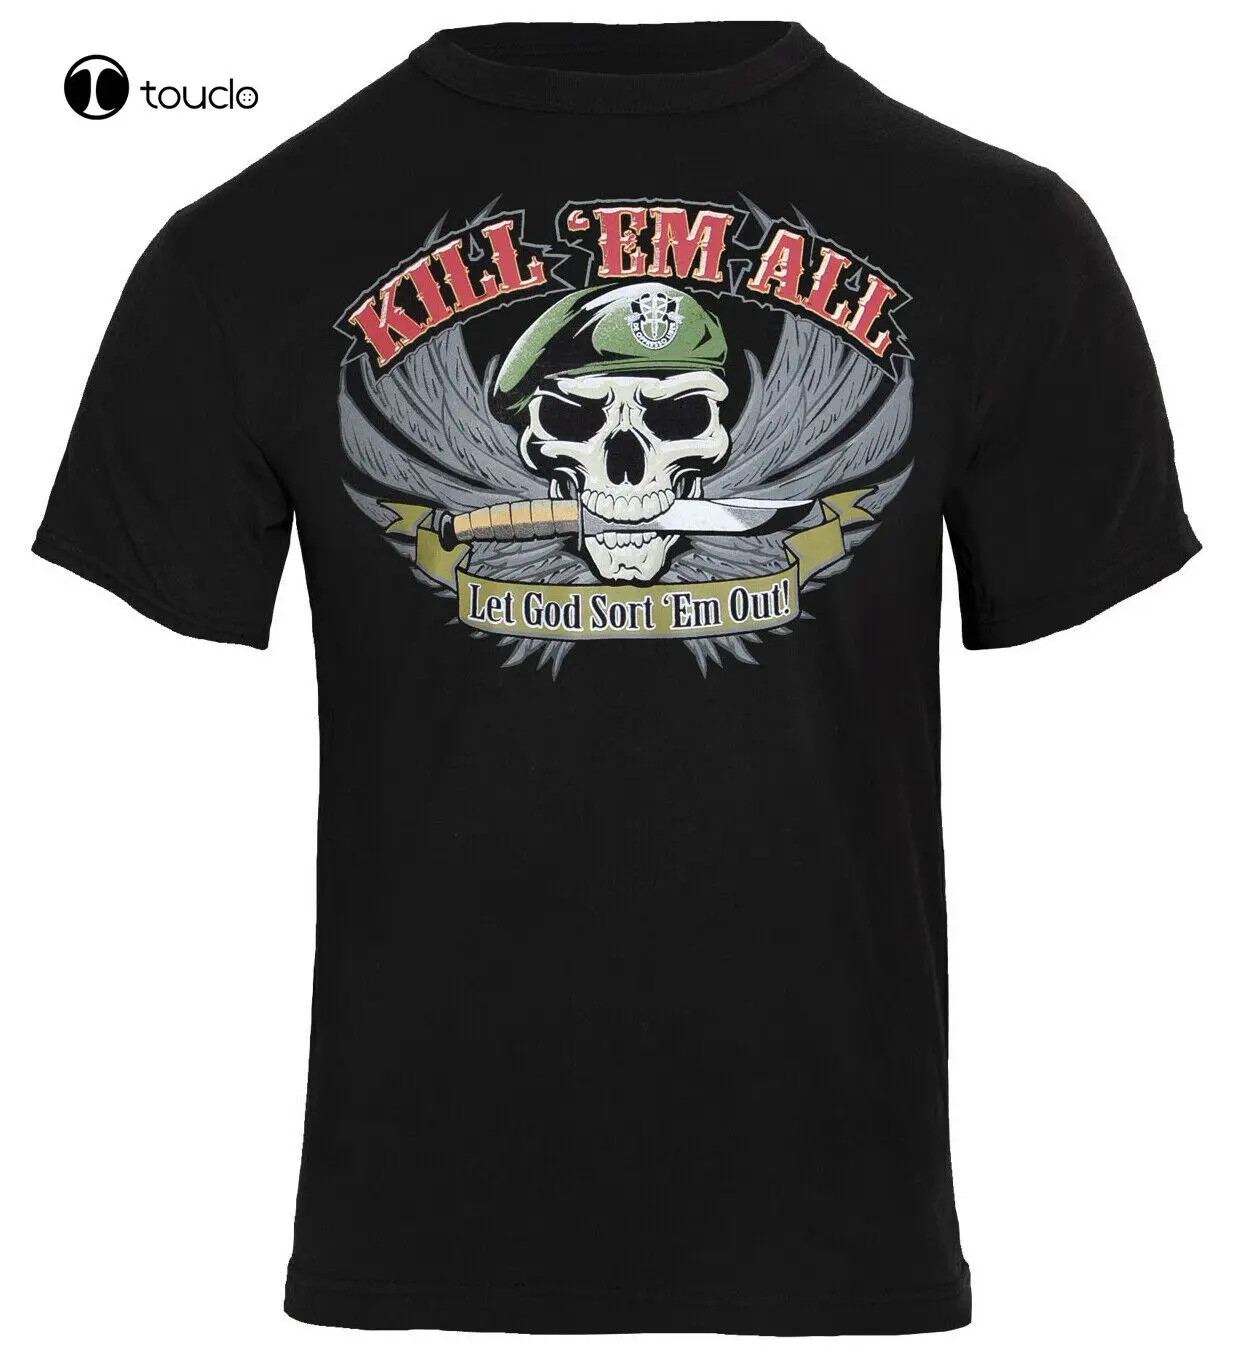 

Black Military T-Shirt Kill Em All Let God Sort Em Out Mens Tee Rothco 66160